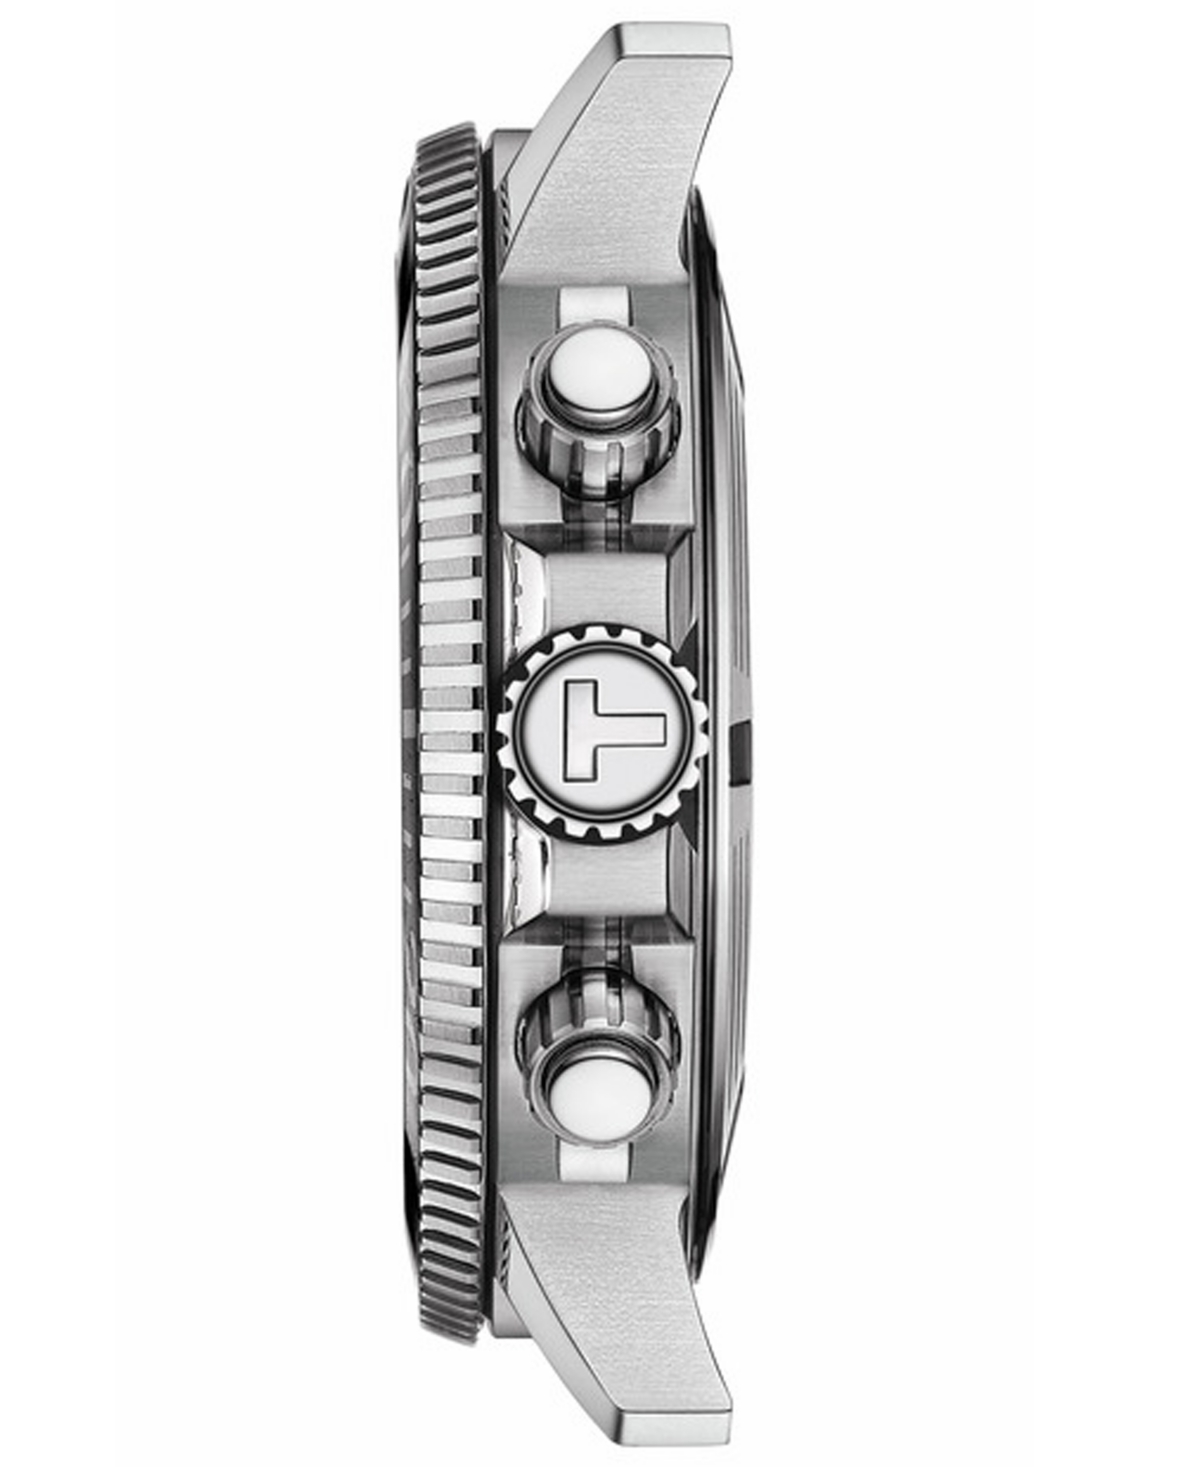 Shop Tissot Men's Swiss Chronograph Seastar 1000 Stainless Steel Bracelet Watch 46mm In Green Gradient